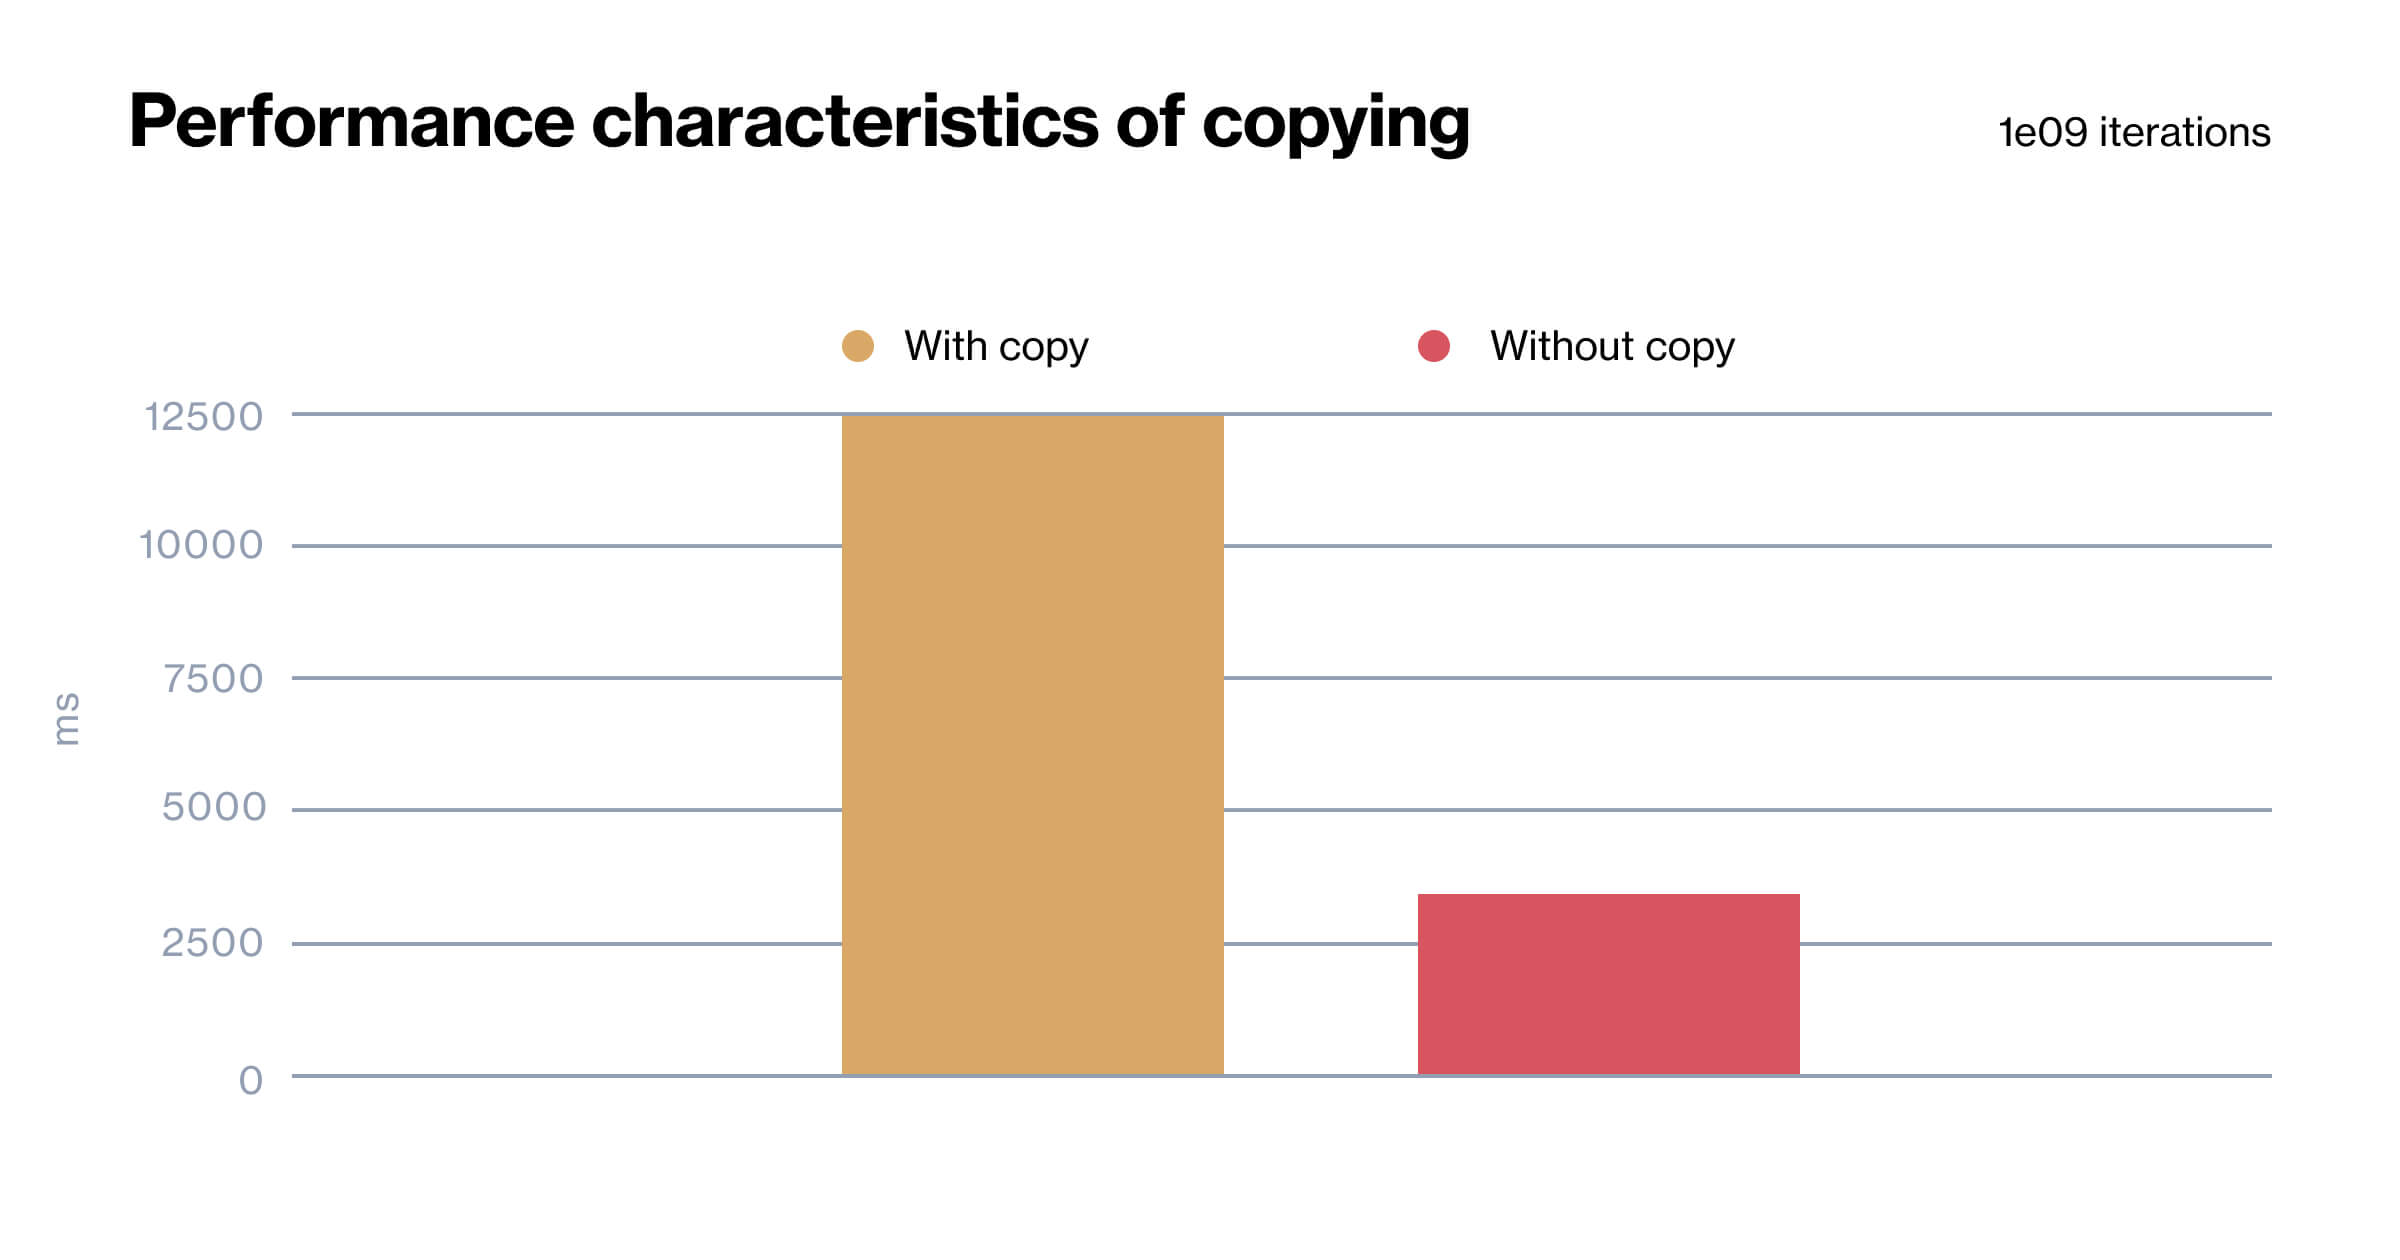  Performance characteristics of copying.